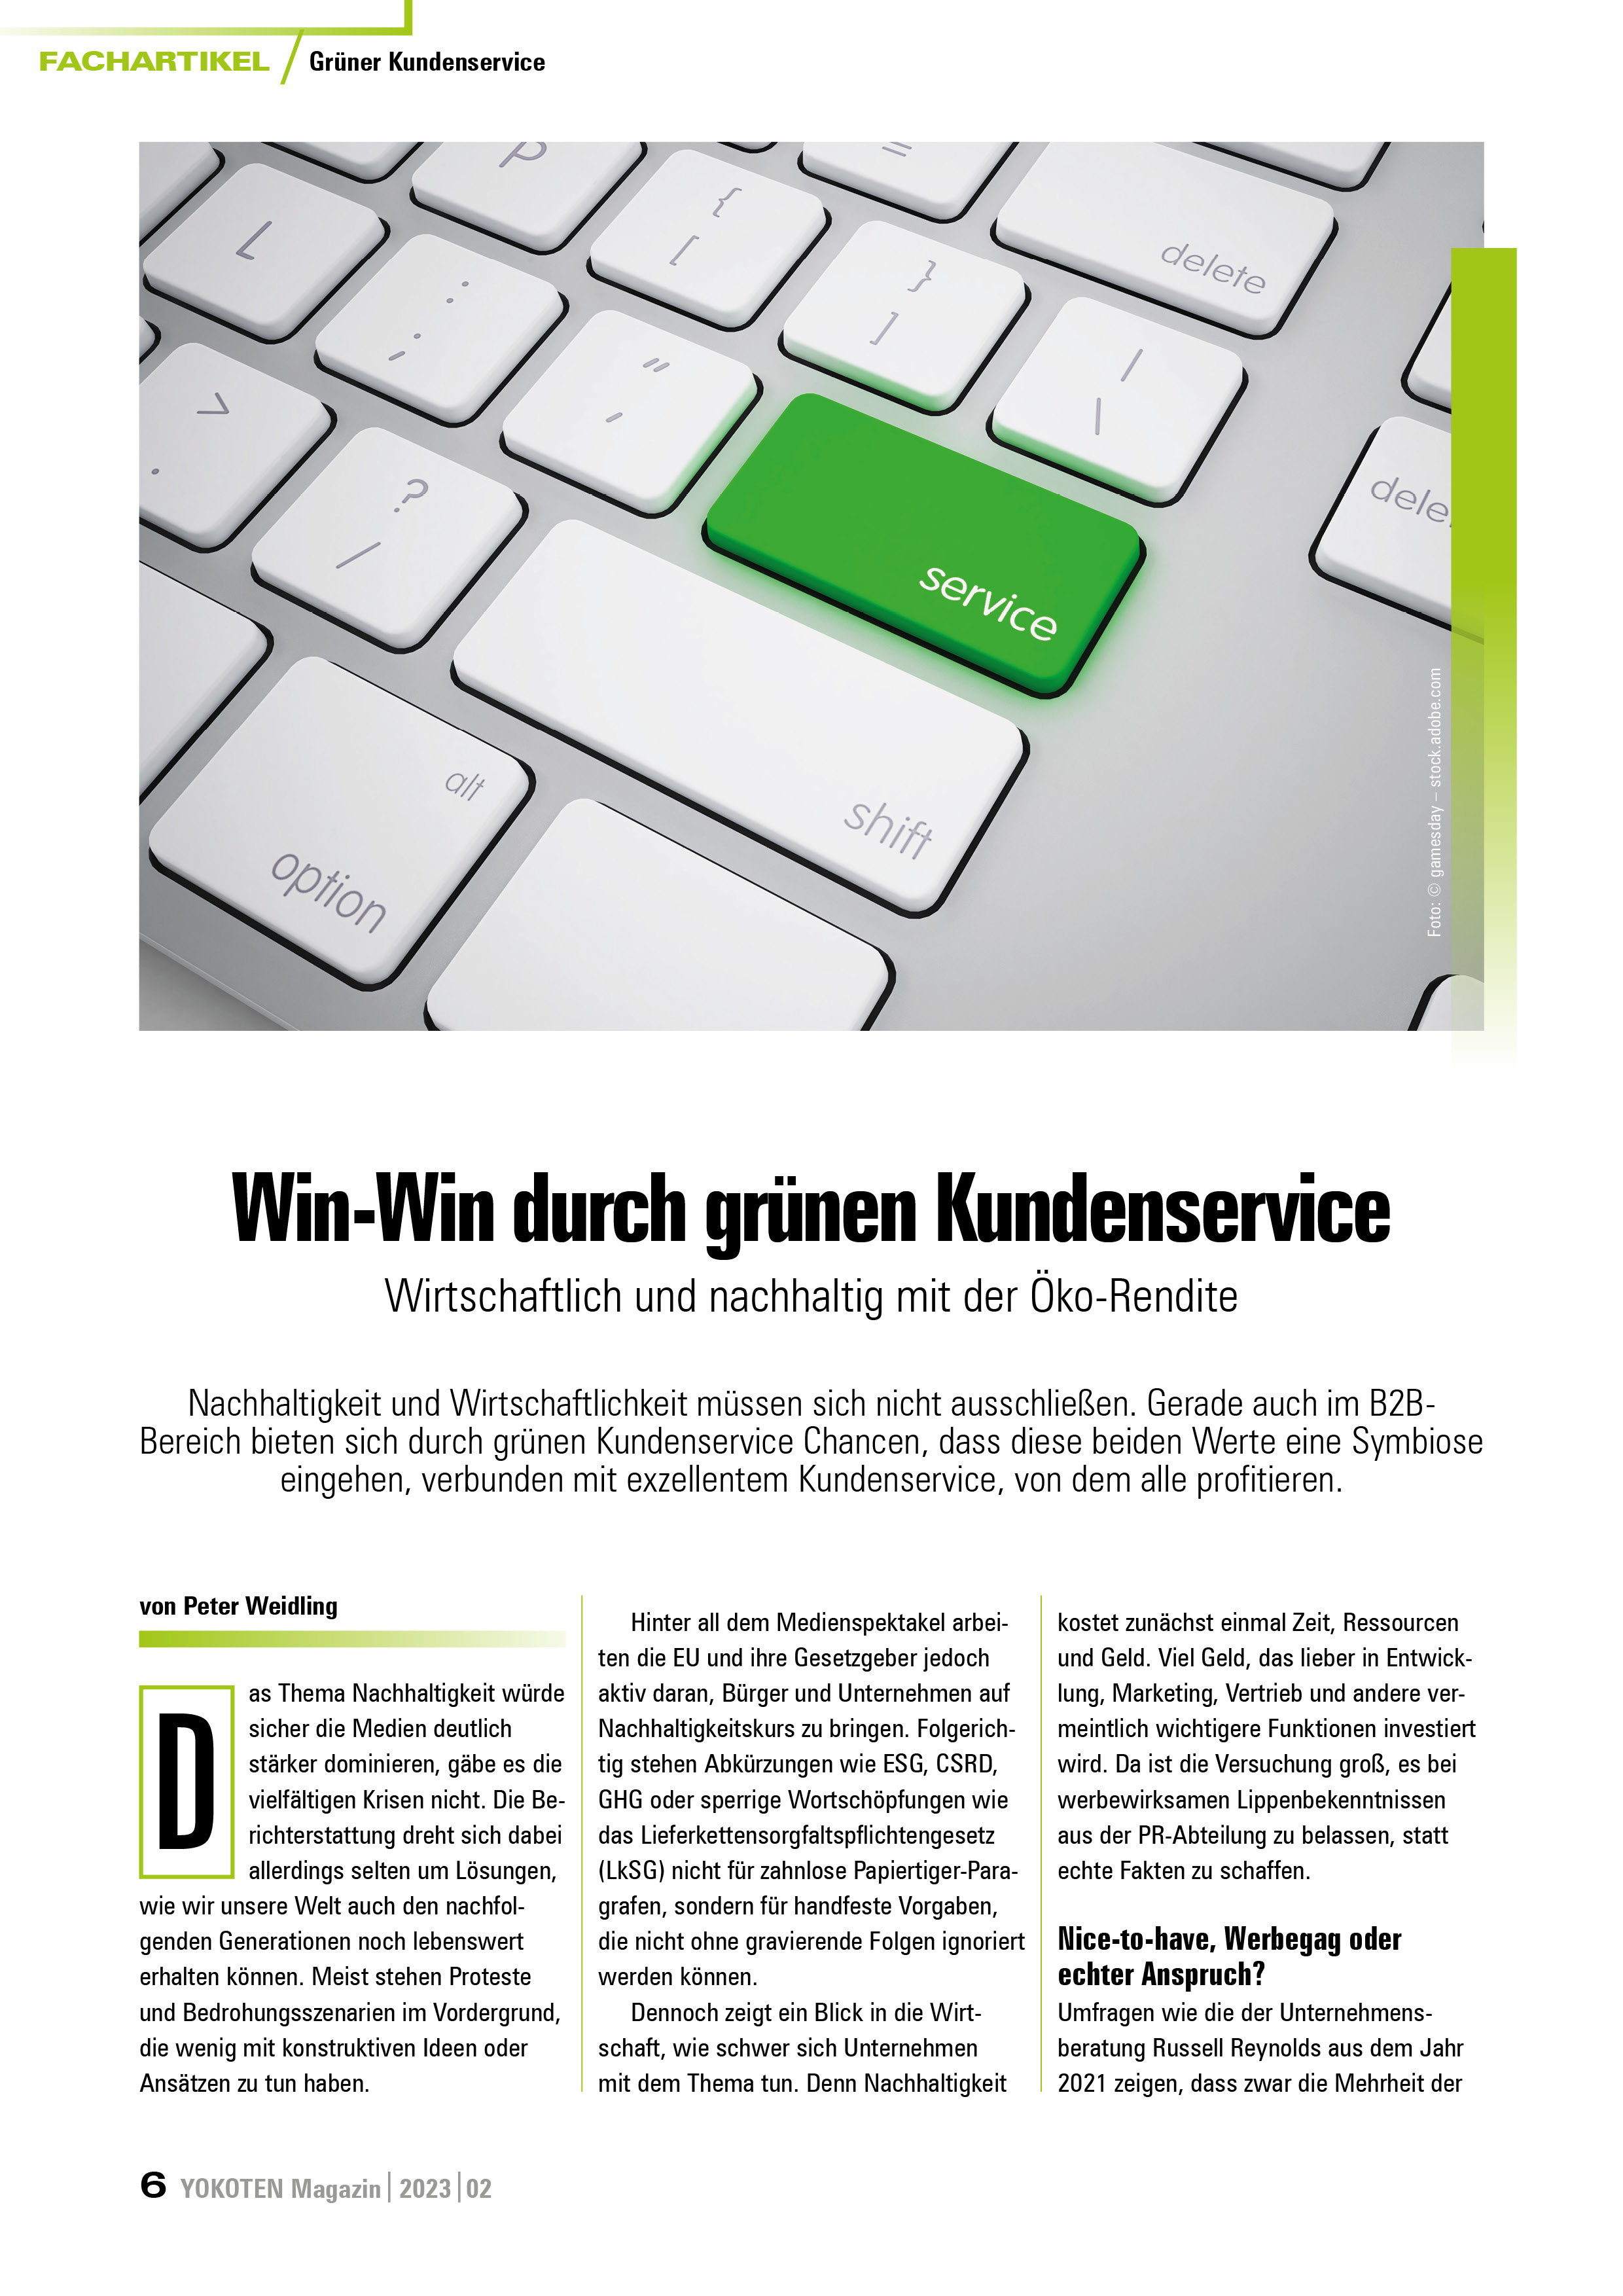 Win-Win durch grünen Kundenservice - Artikel aus Fachmagazin YOKOTEN 2023-02